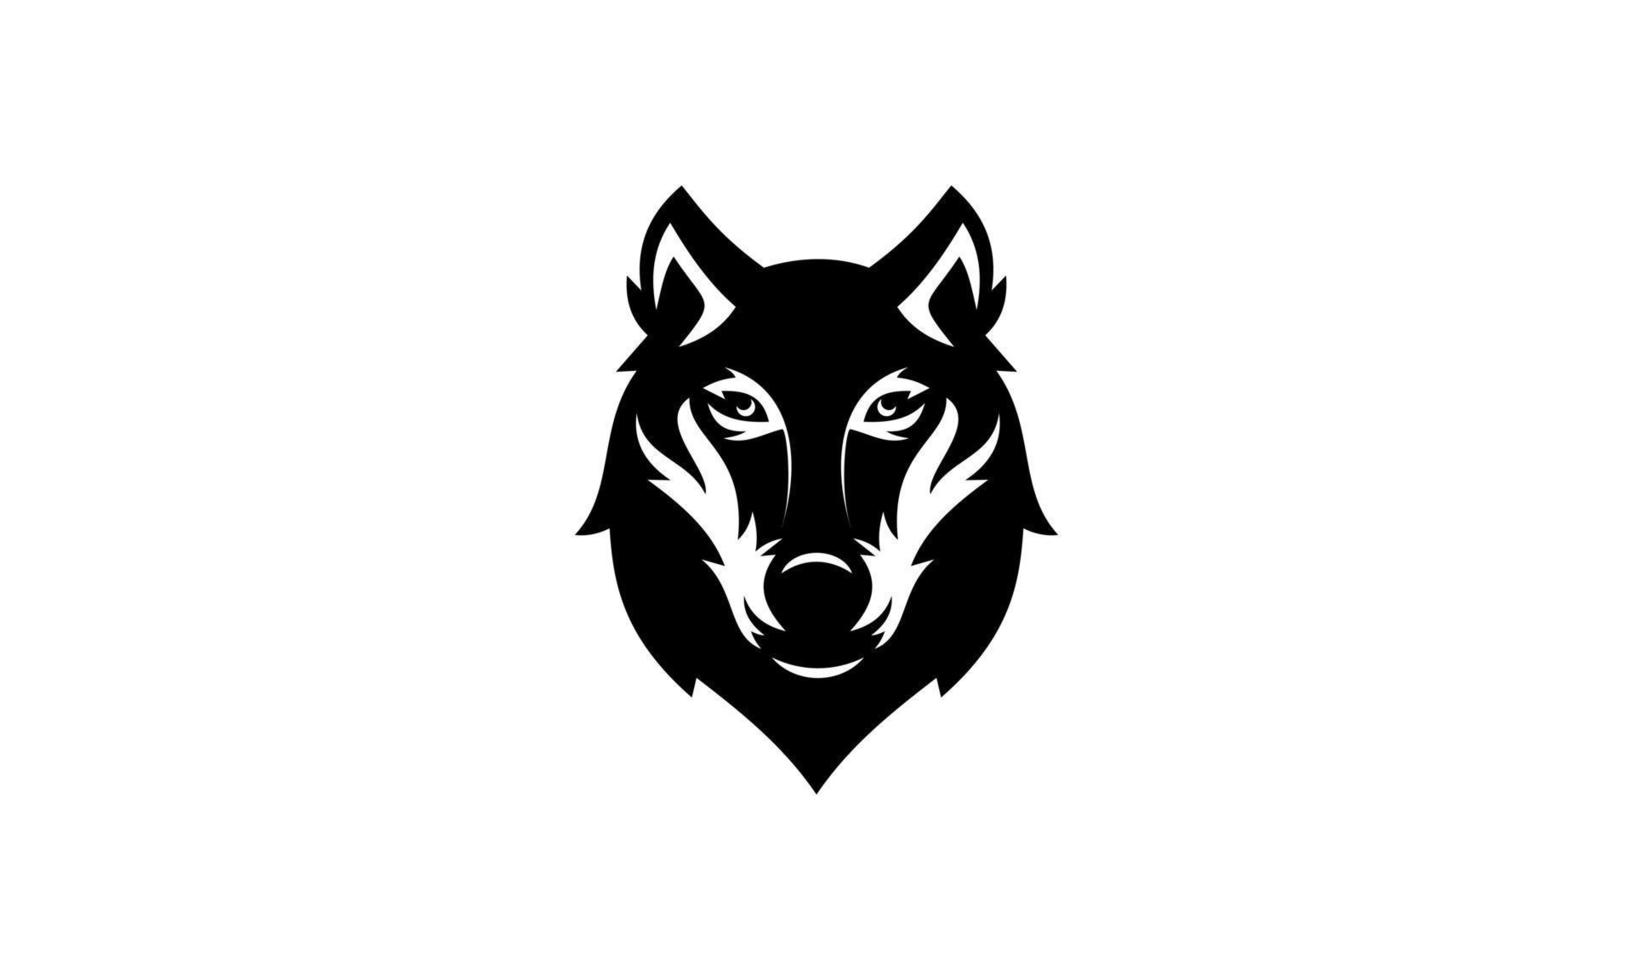 wolf gezicht logo vector ontwerp